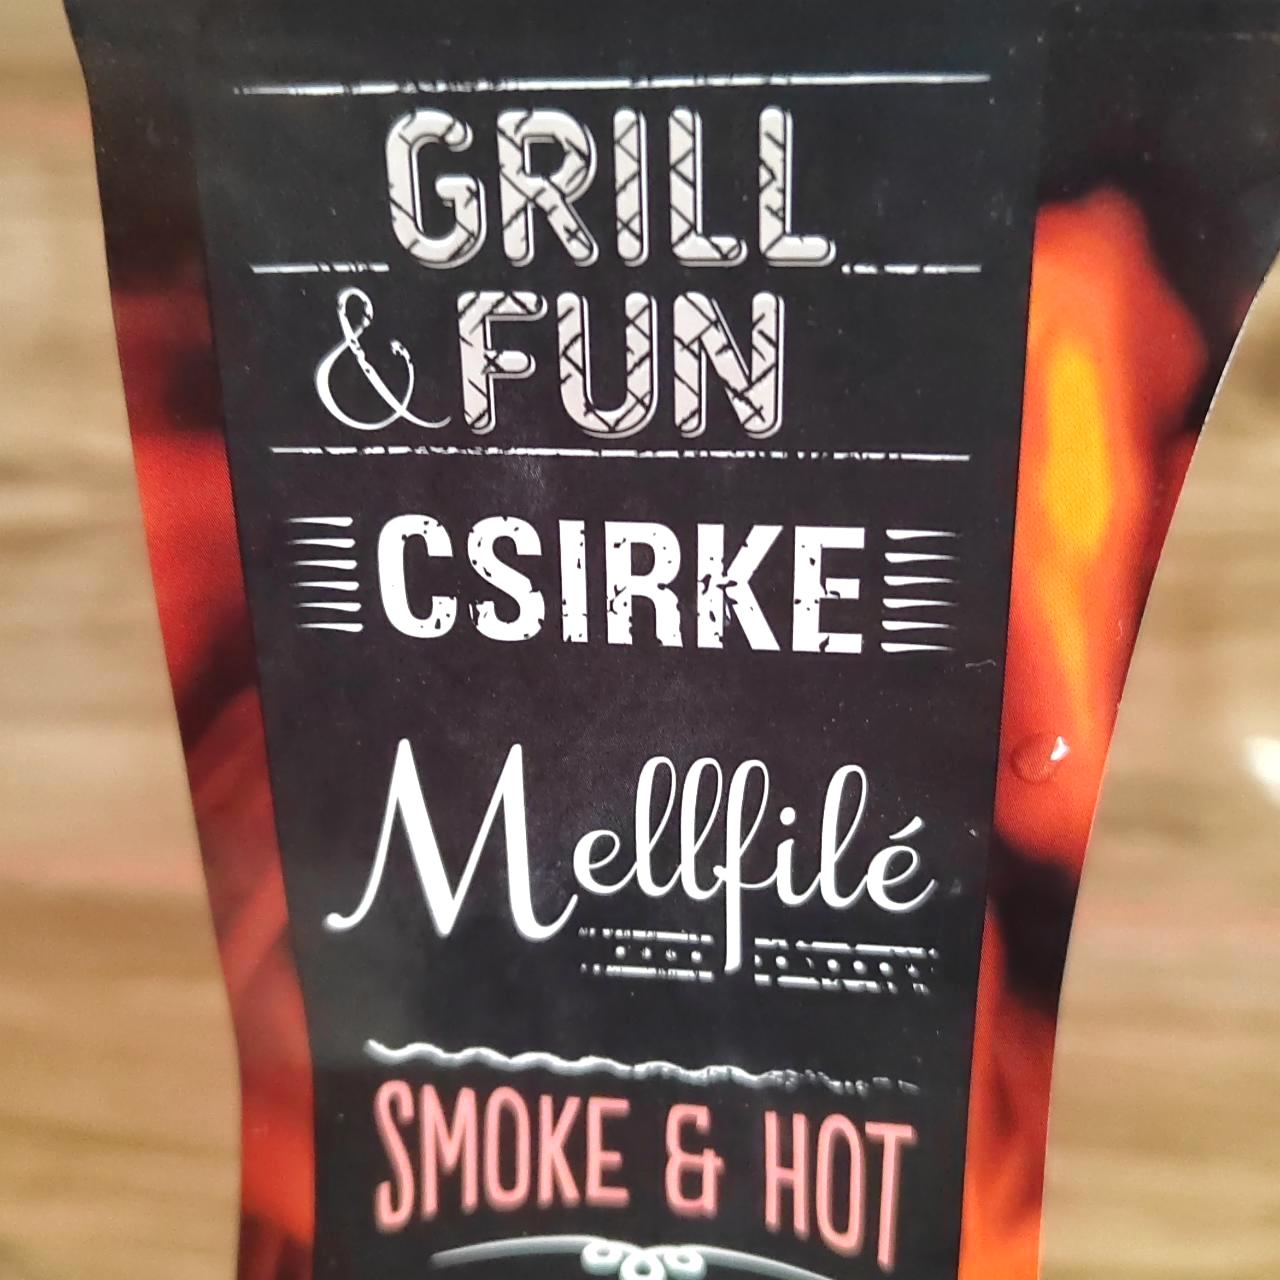 Képek - Csirke mellfilé smoke & hot Grill & Fun